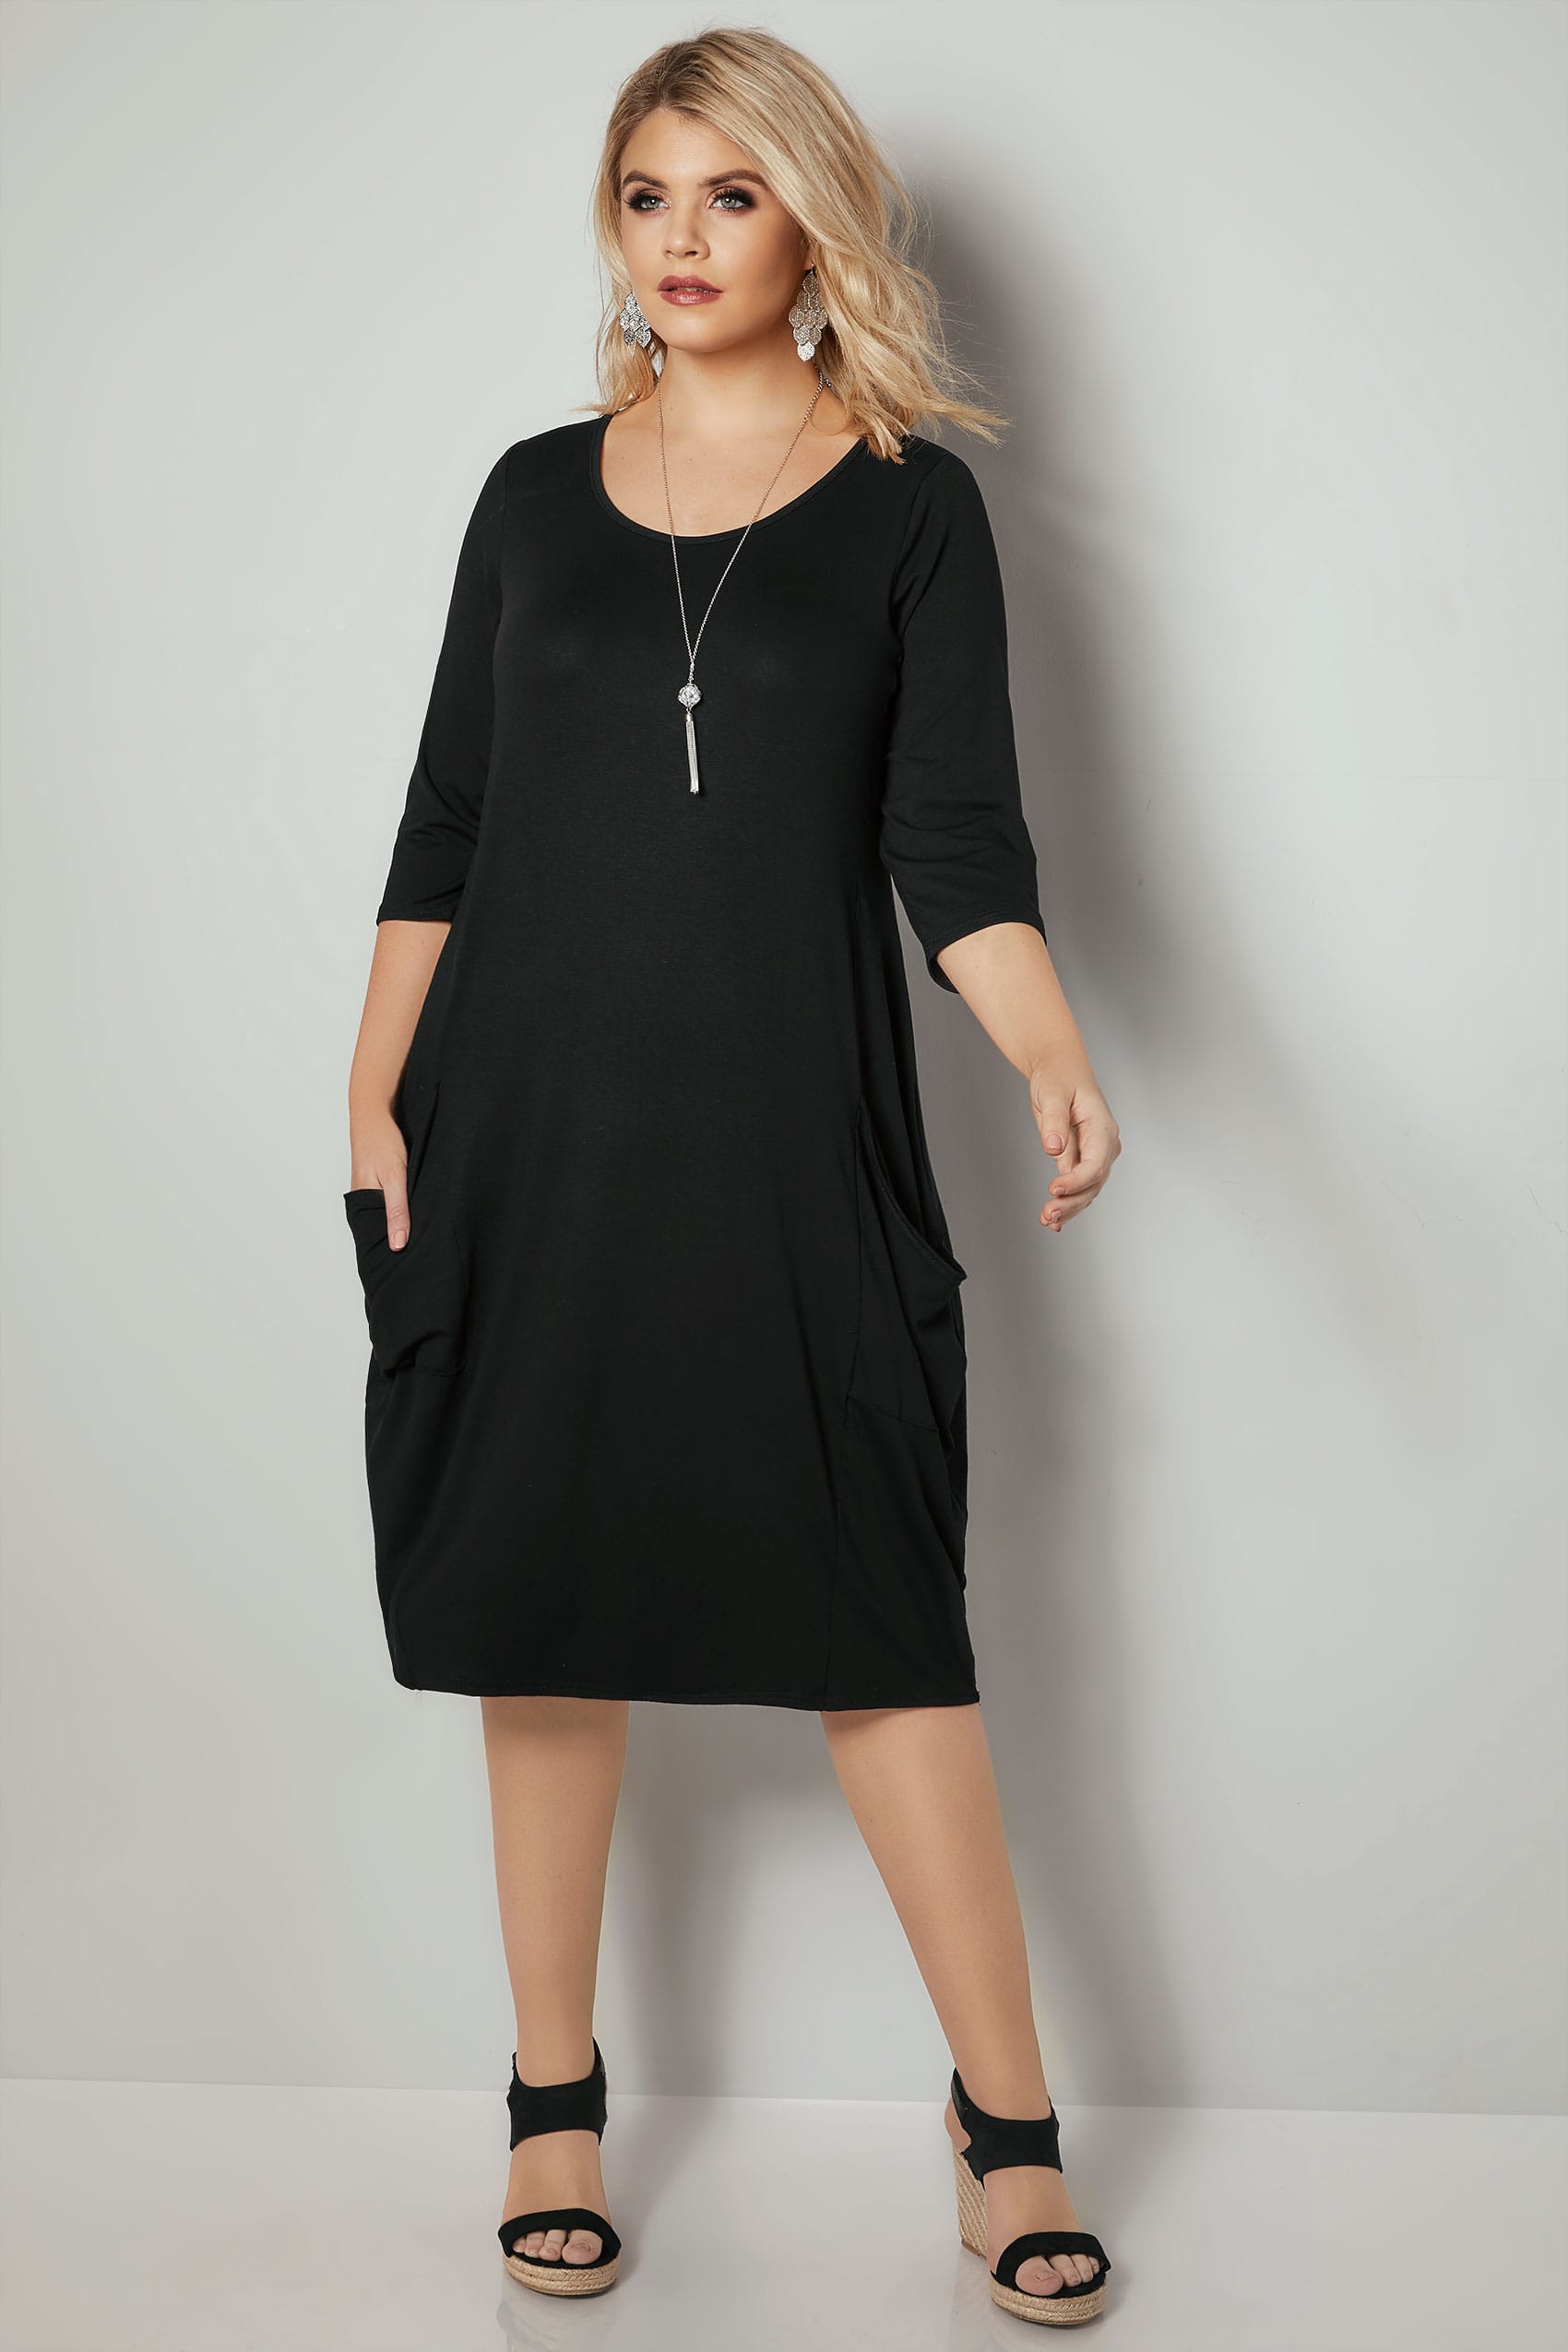 Black Drape Pocket Jersey Dress With 3/4 Sleeves, plus ...